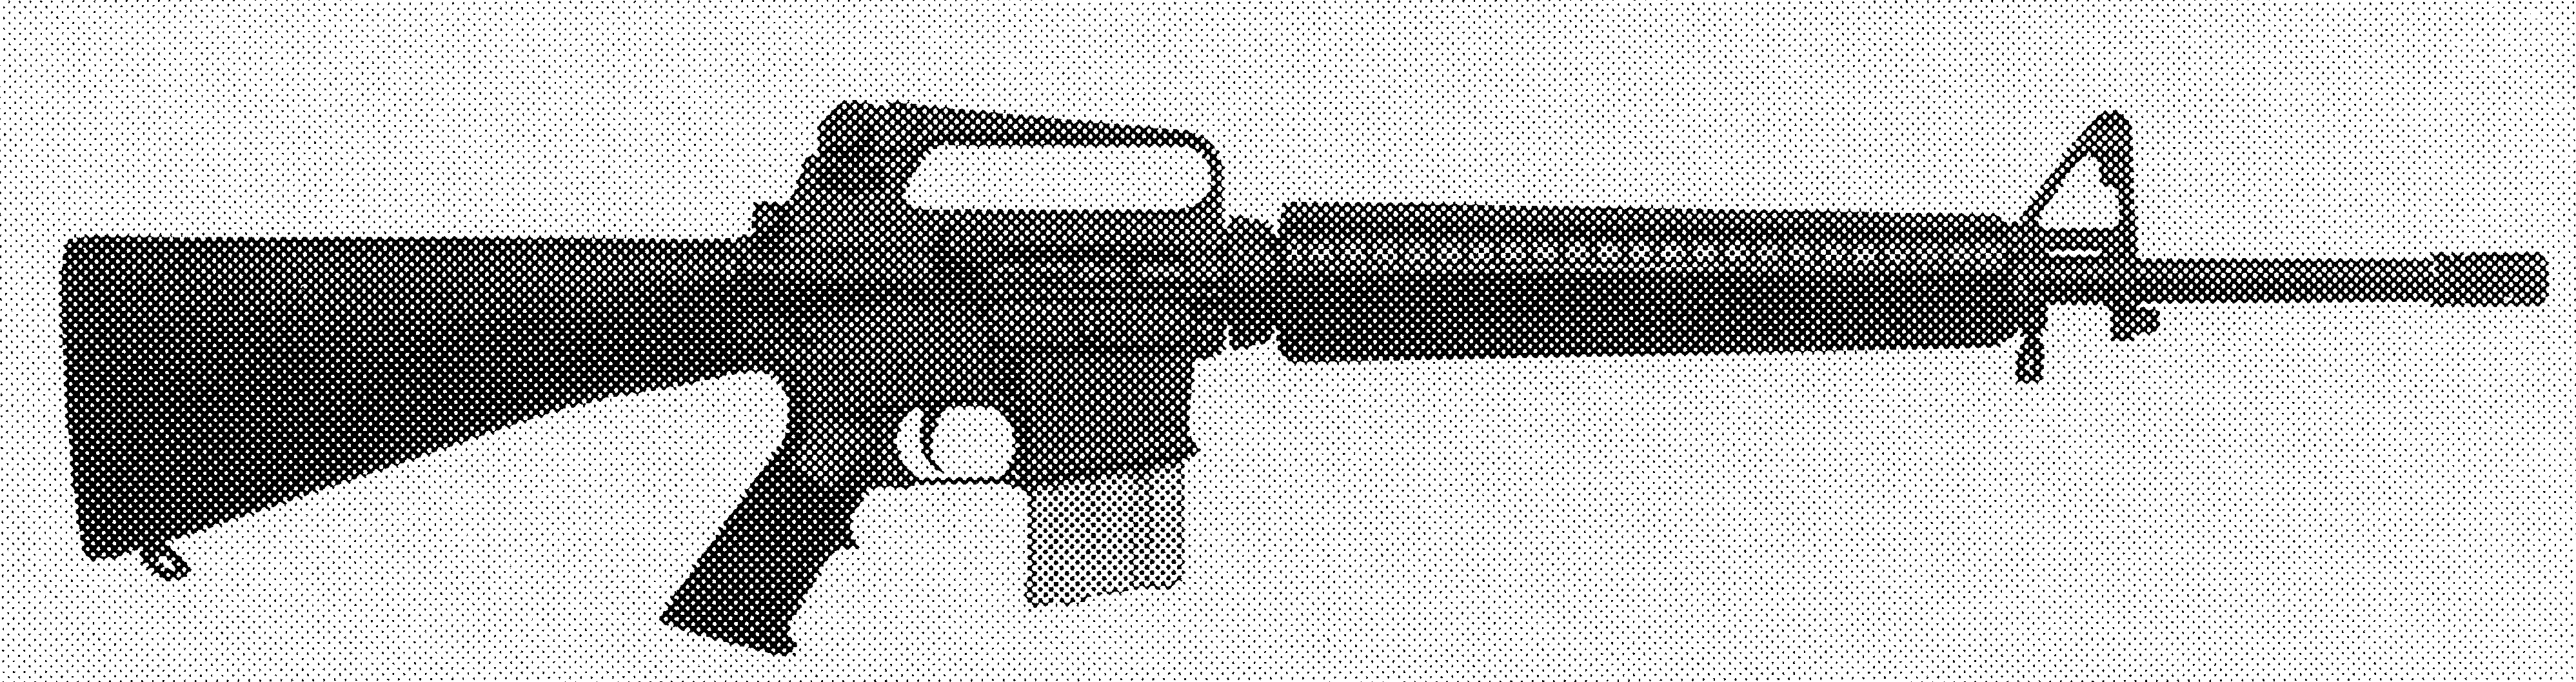 AR-15A2 Government Model (Model #6550)